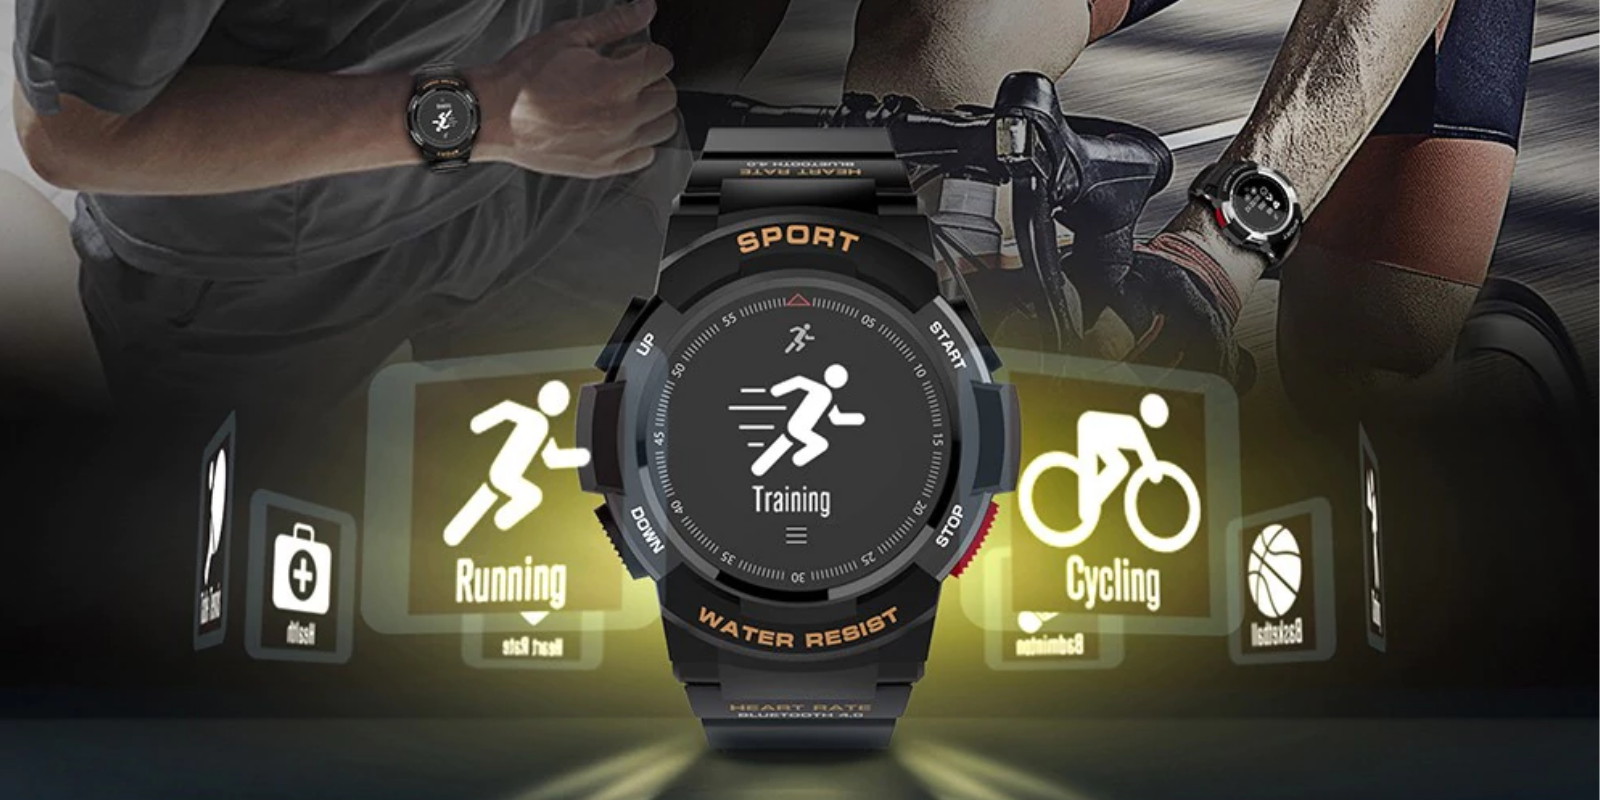 Смарт часы x5 pro. Умные часы no.1 f6, черный. Smart часы x5 Pro. Умные часы no.1 f6 серебристые. New Smart watch x5pro Smart watch ip68 Waterproof Heart rate monitoring x5 Pro Sport SMARTWATCH NFC.